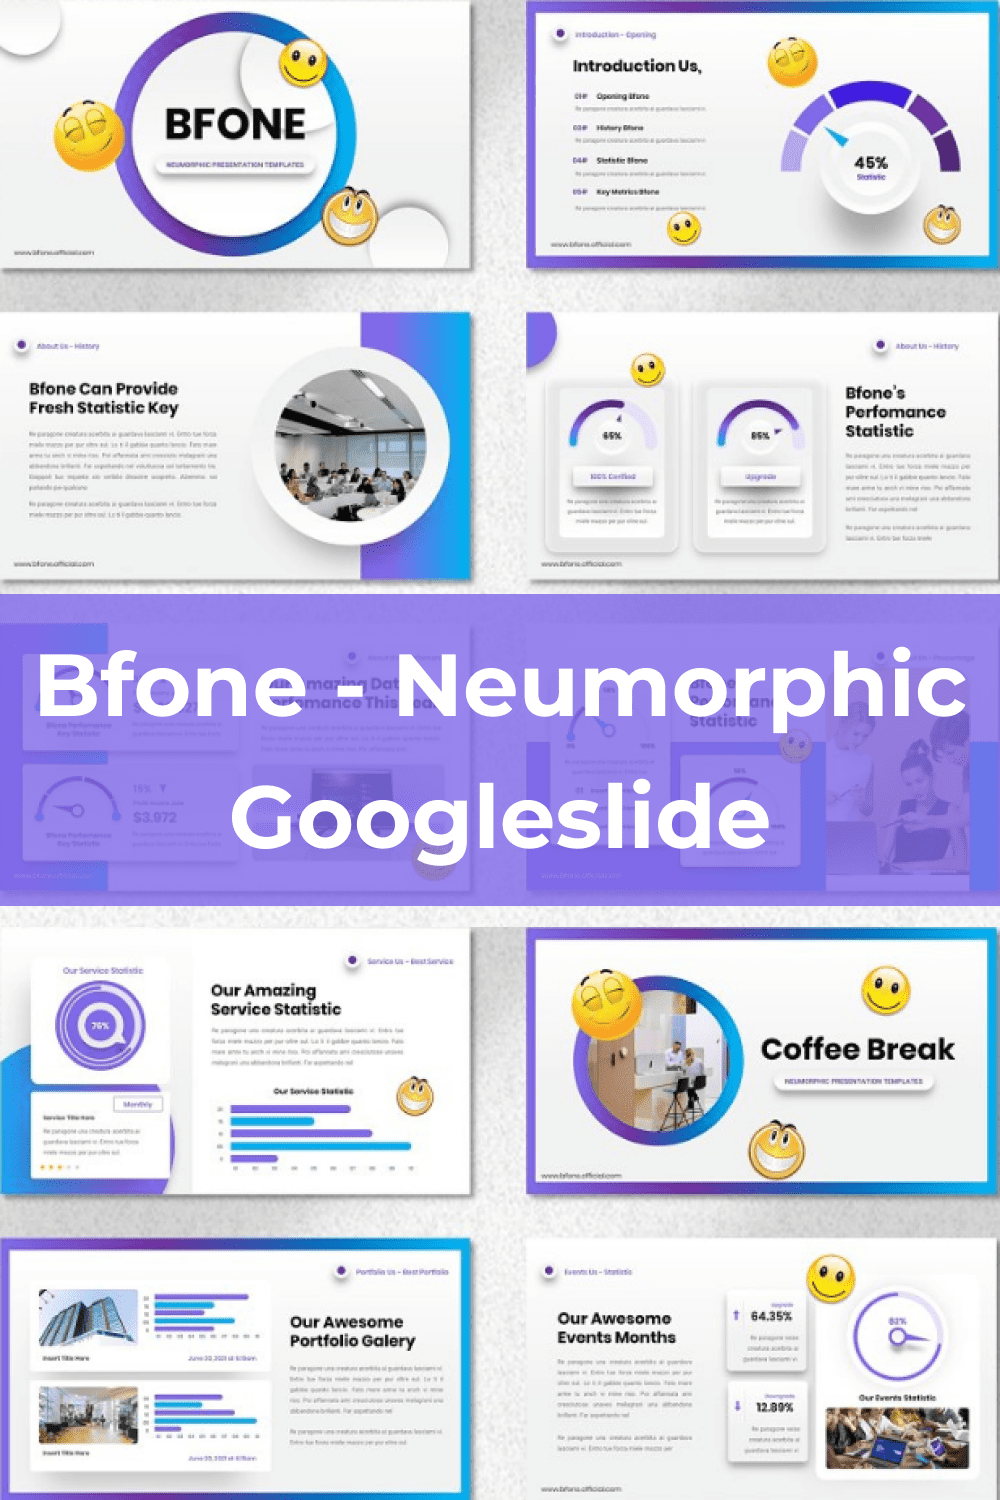 Bfone - Neumorphic Googleslide Pinterest.